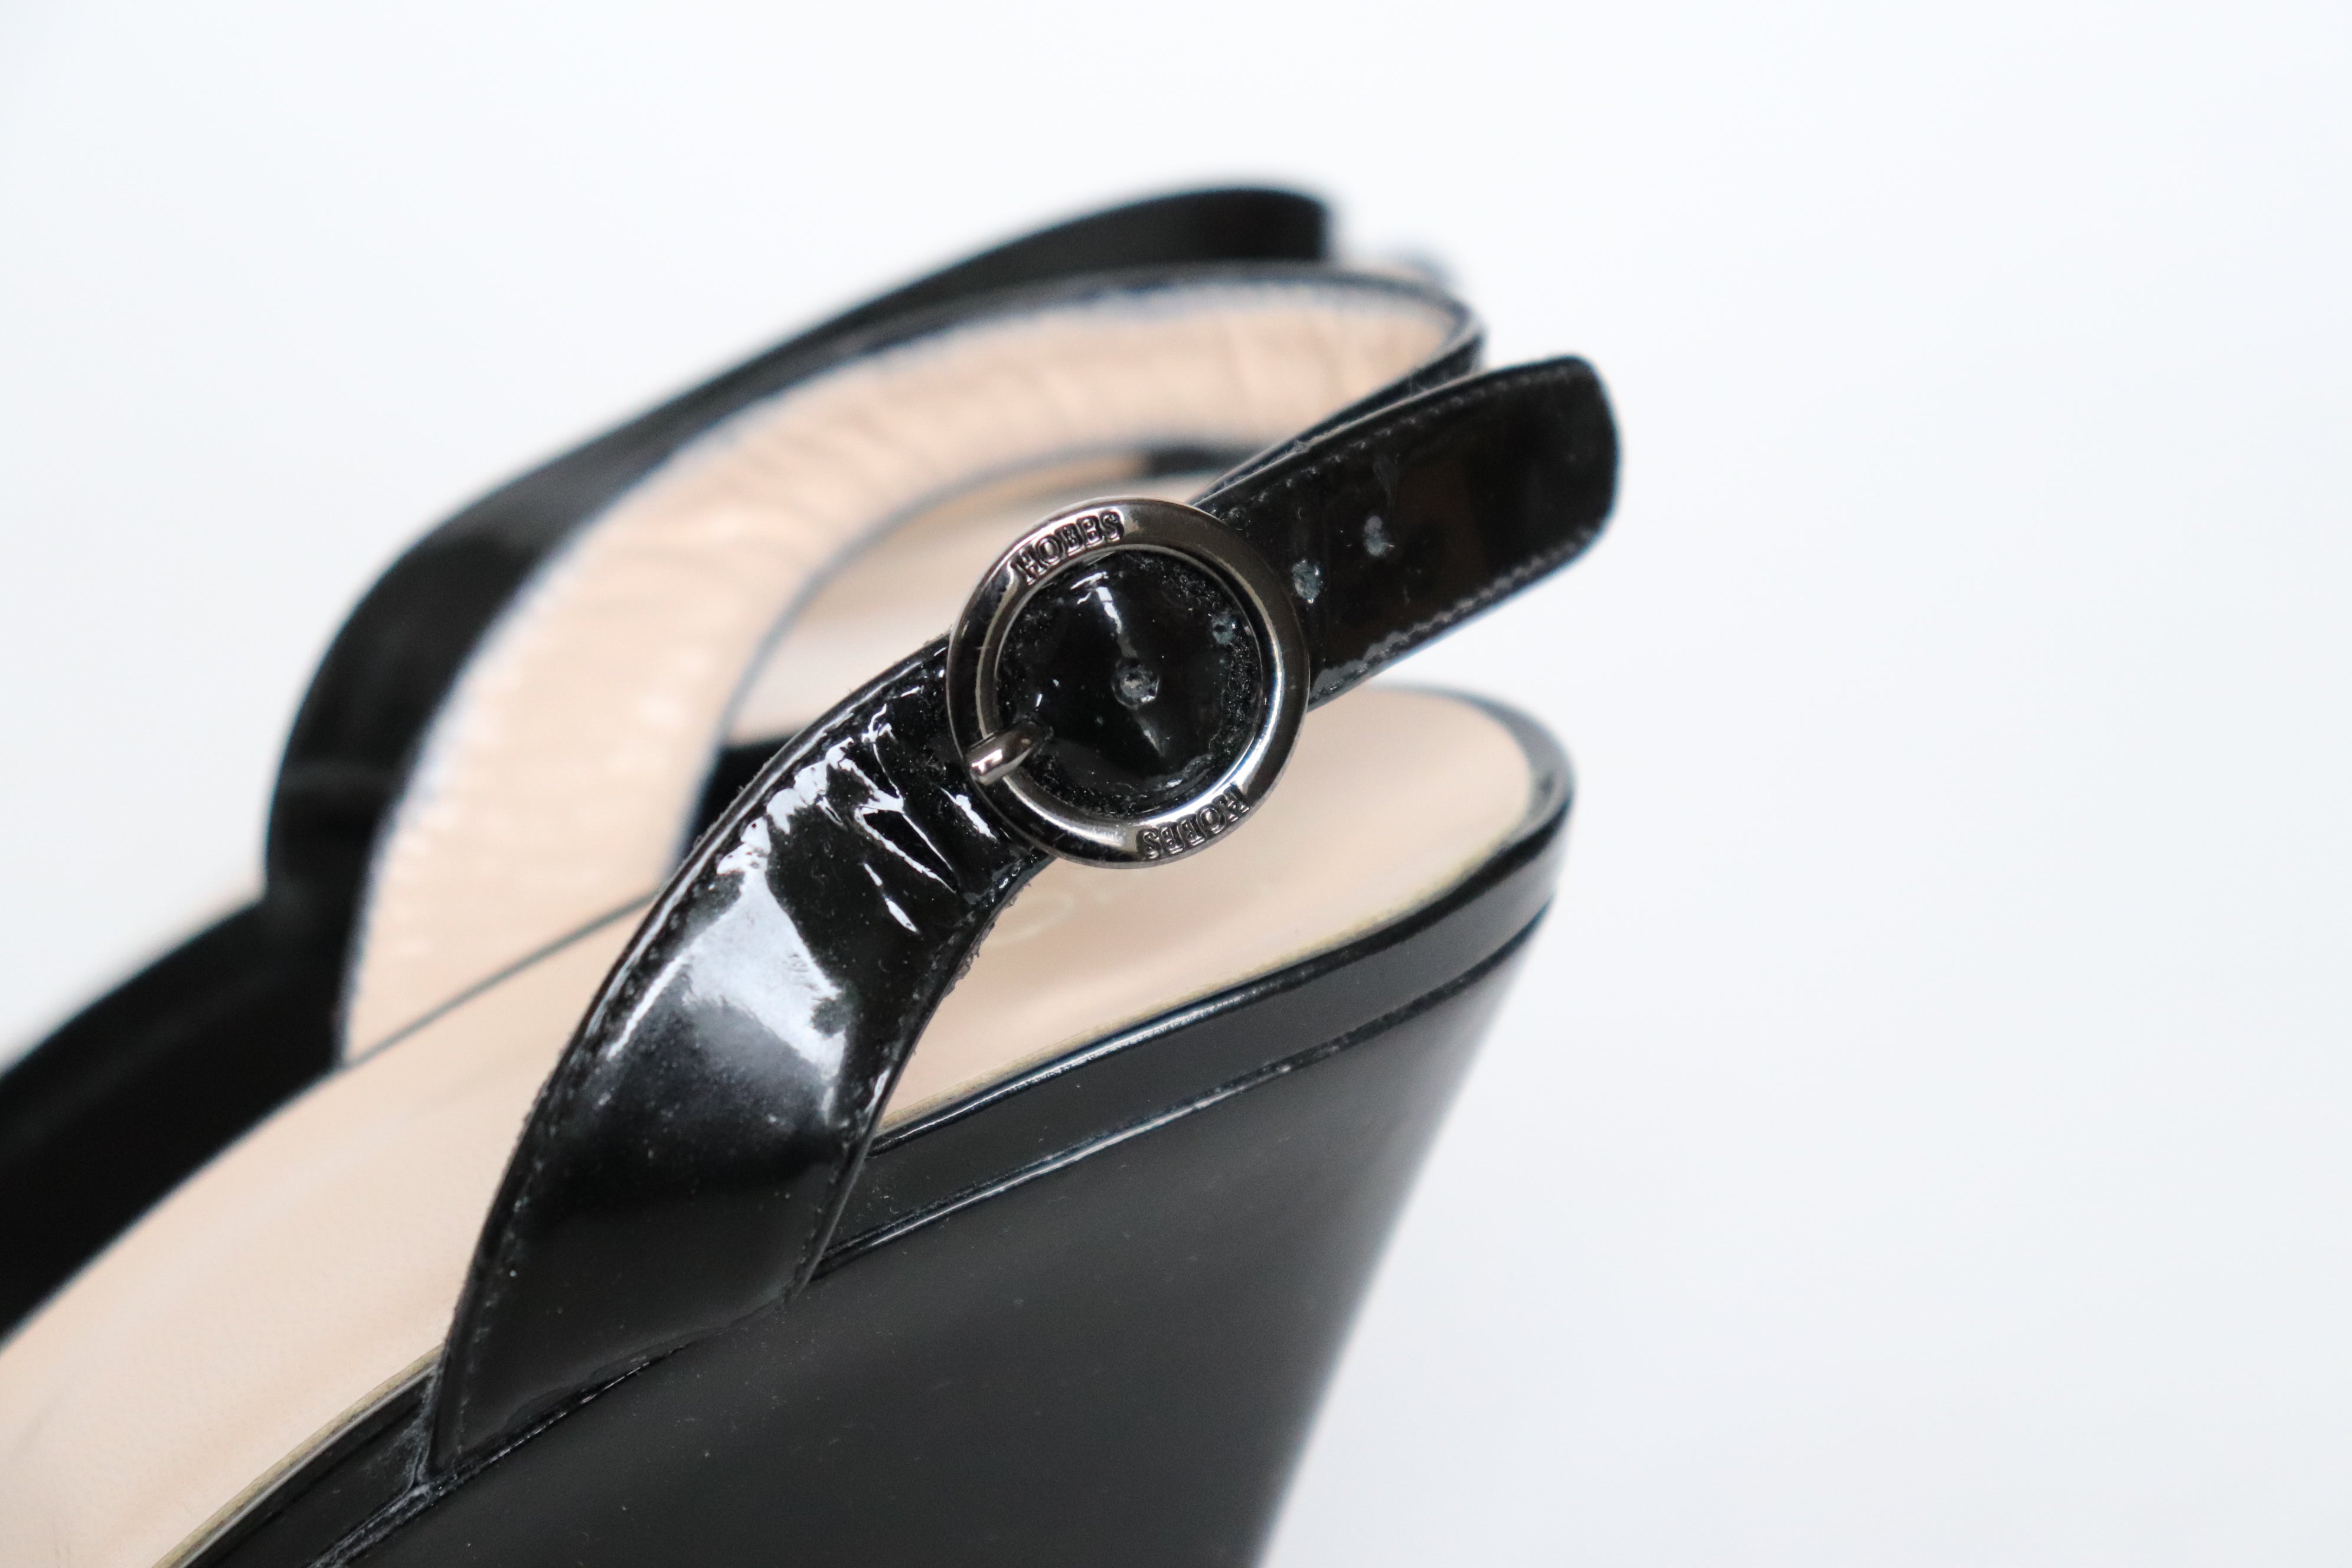 Hobbs Wedge Heel Slingback Sandals - Black Patent Leather - 41 / UK 8